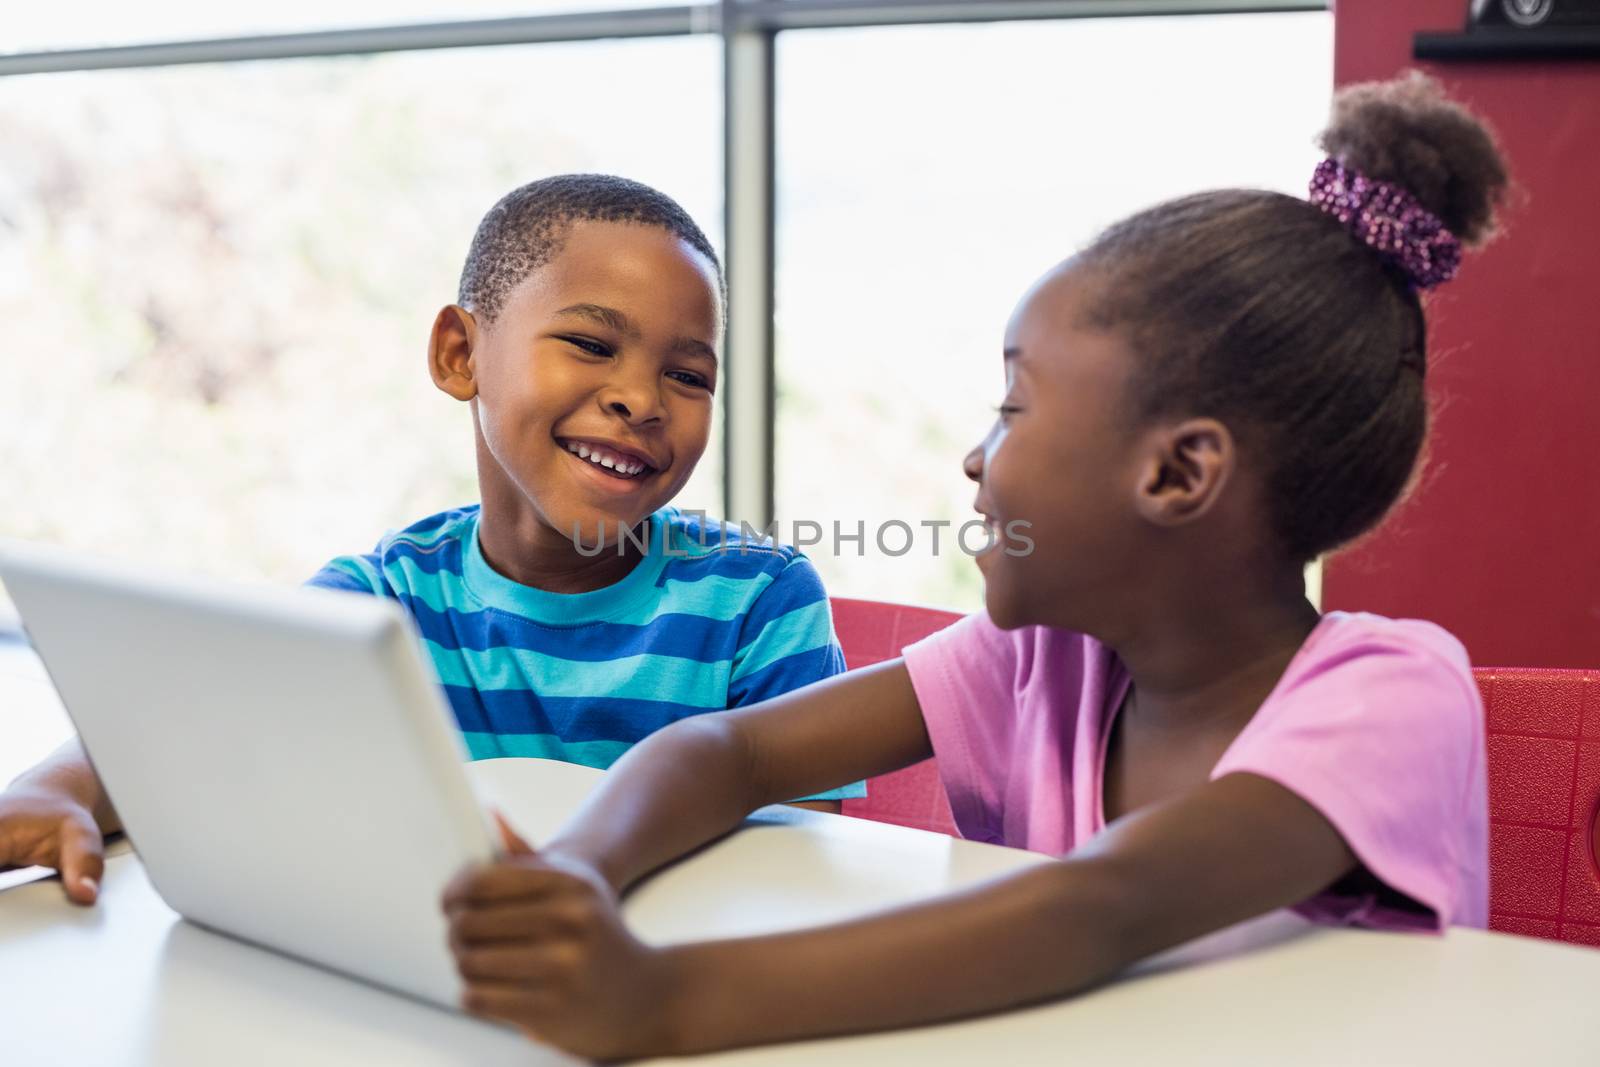 School kids using a digital tablet in classroom by Wavebreakmedia